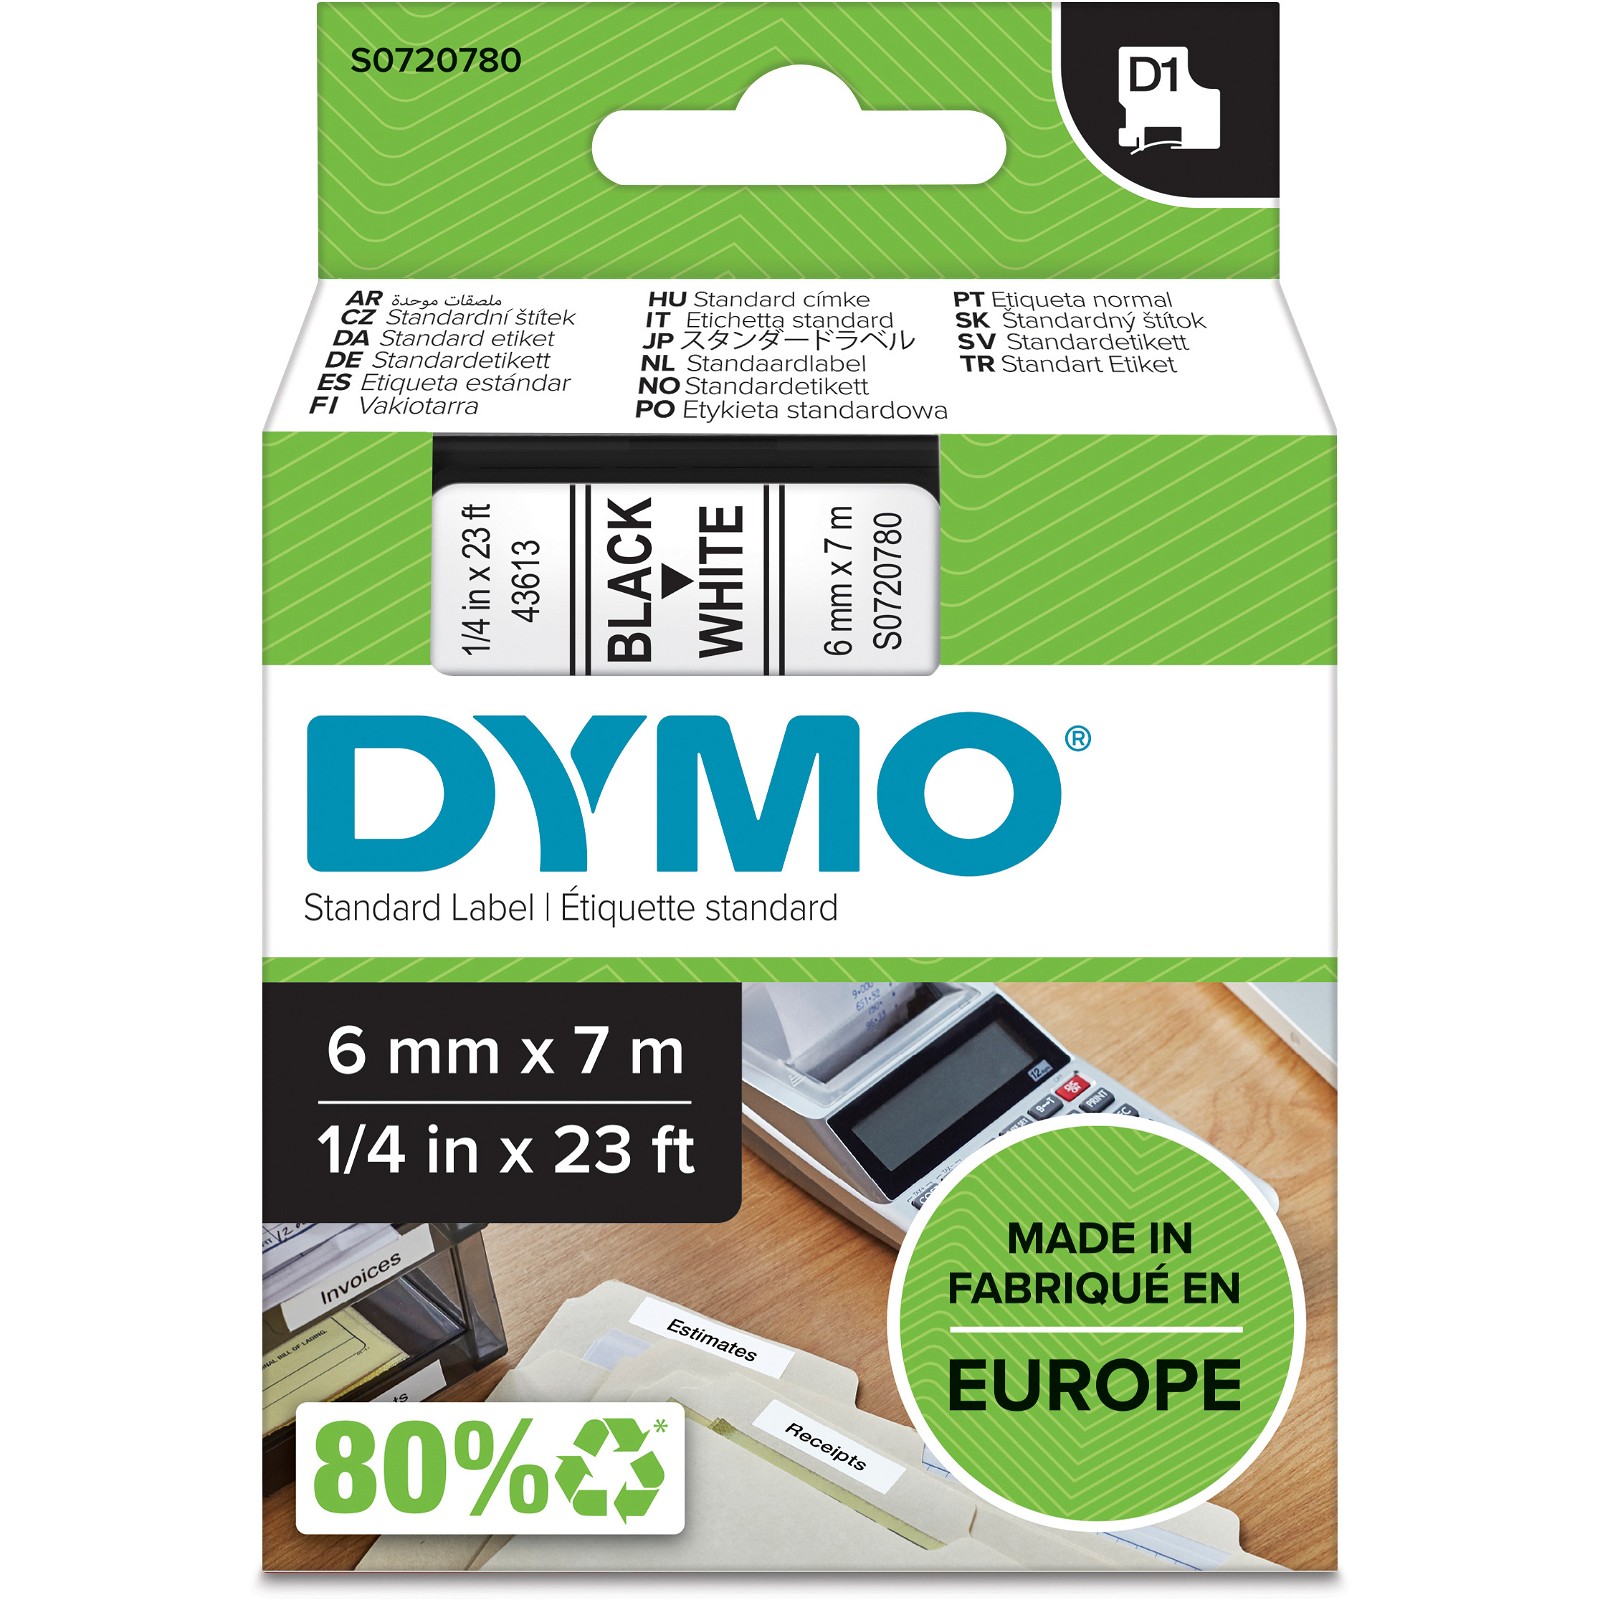 Dymo D1 polyester tape sort/hvid 6mm x 7m